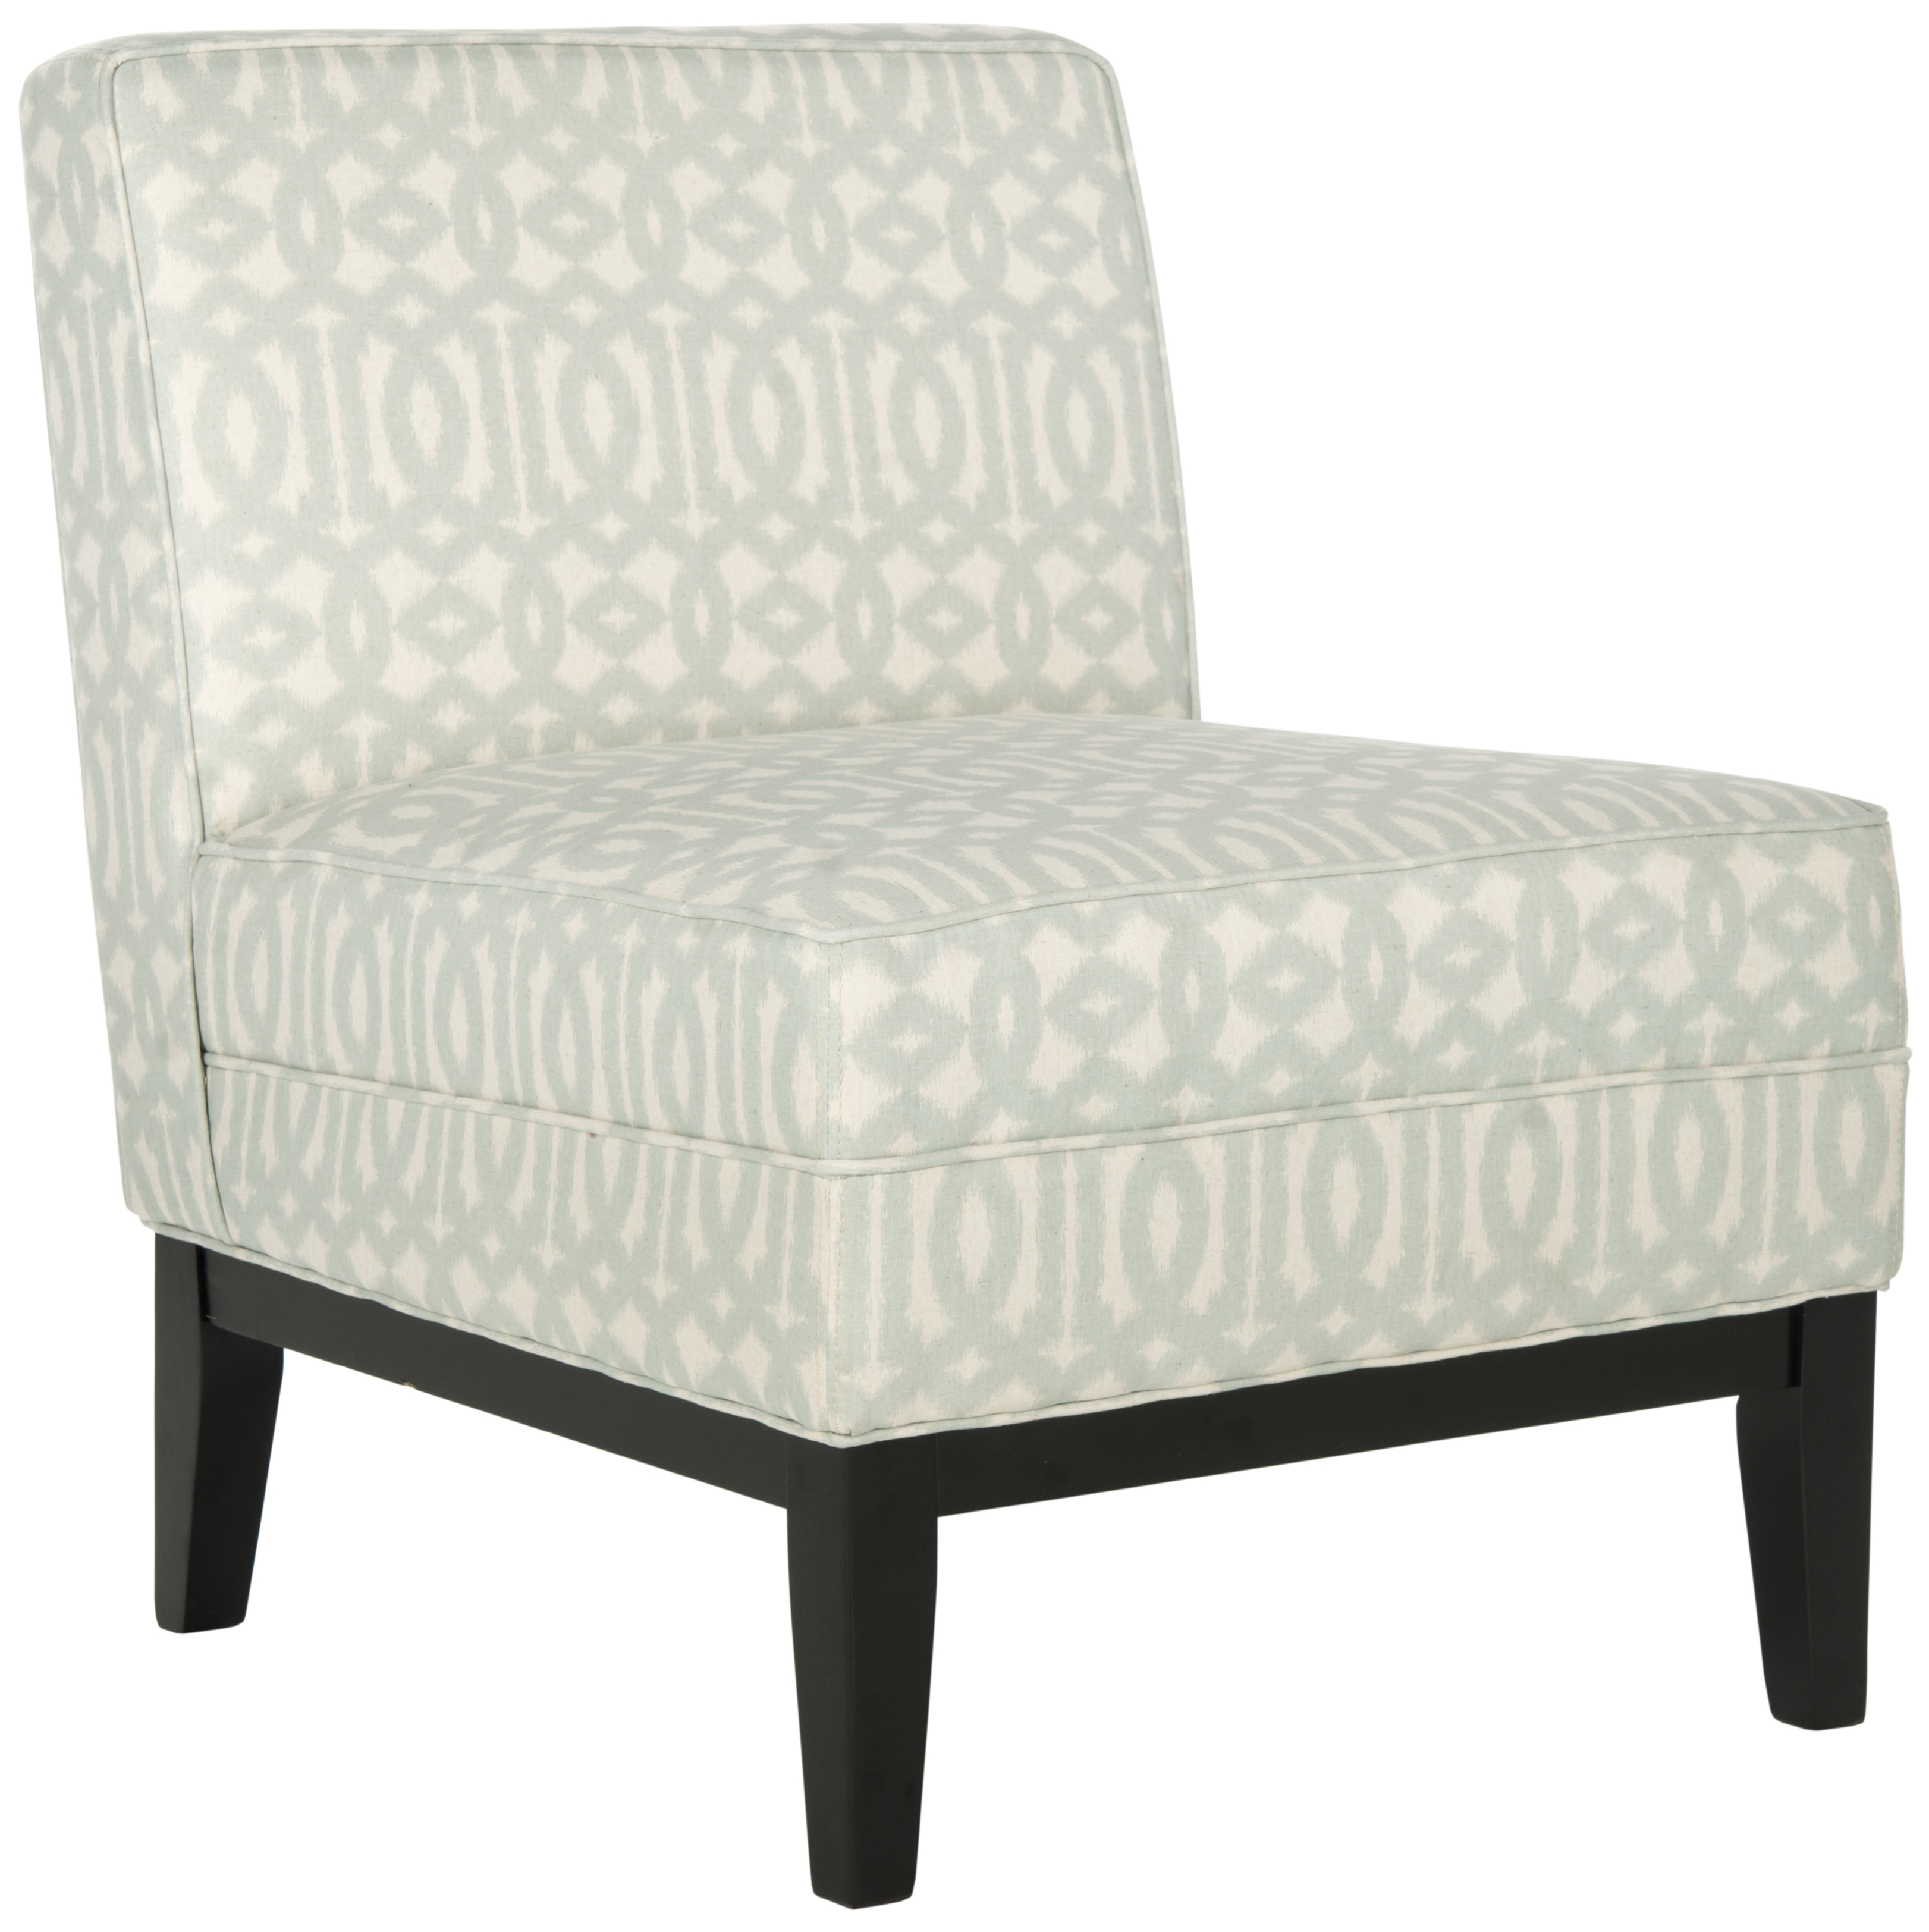 Armond Chair - Seafoam/Cream - Arlo Home - Image 1